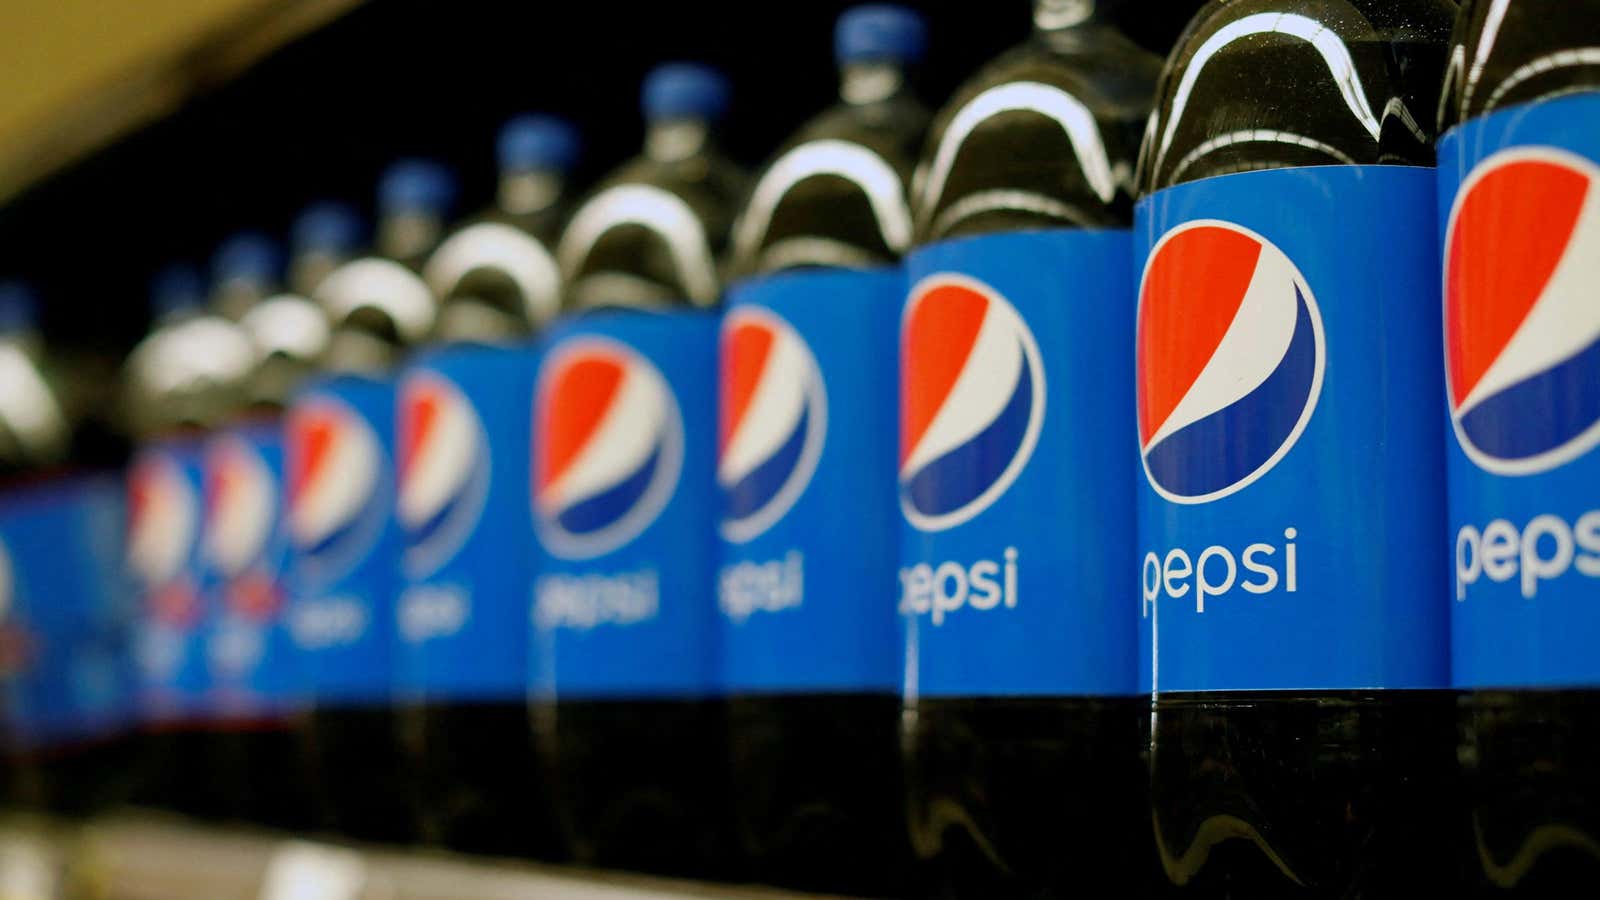 Inflation isn't hurting Pepsi